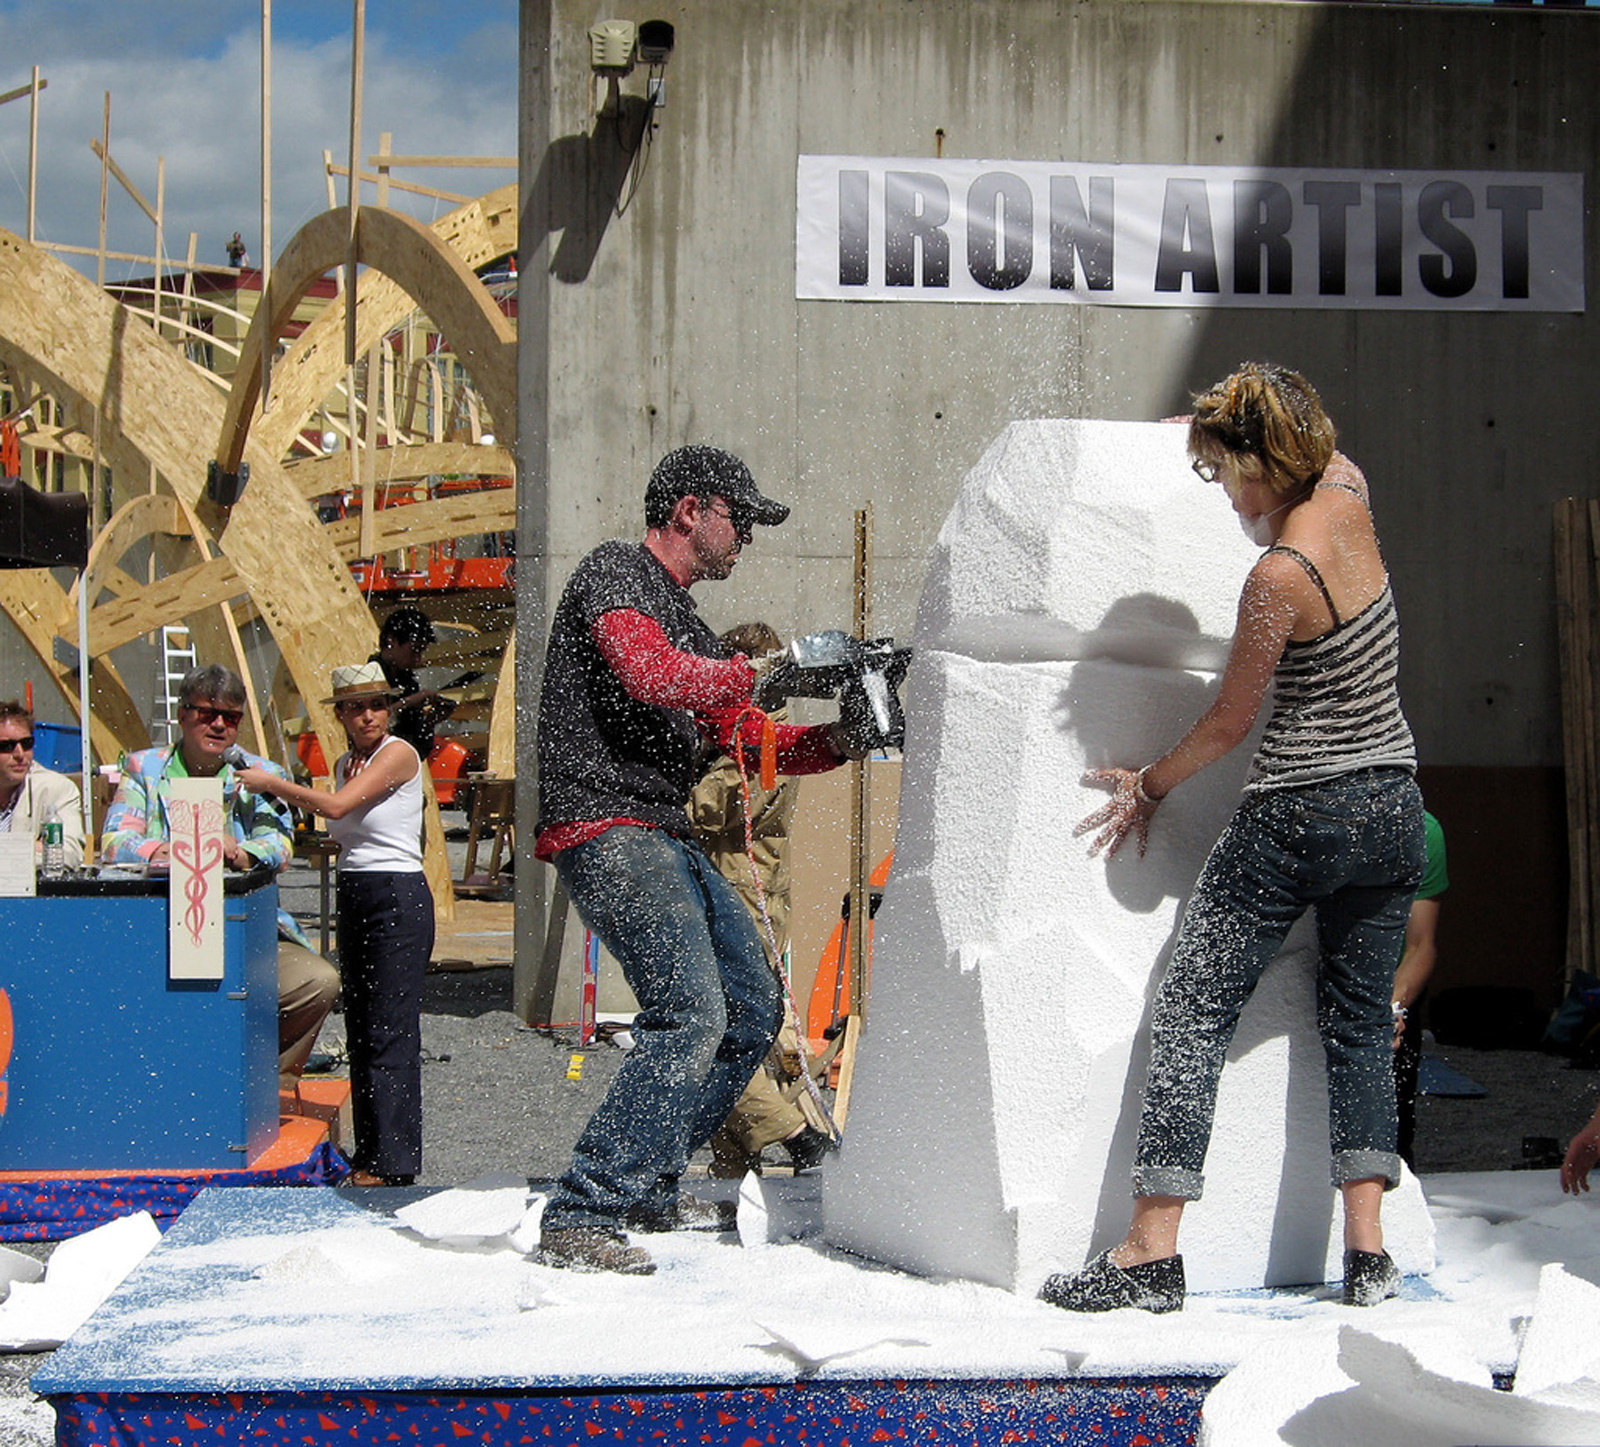 Both teams begin sculpting with large foam blocks.